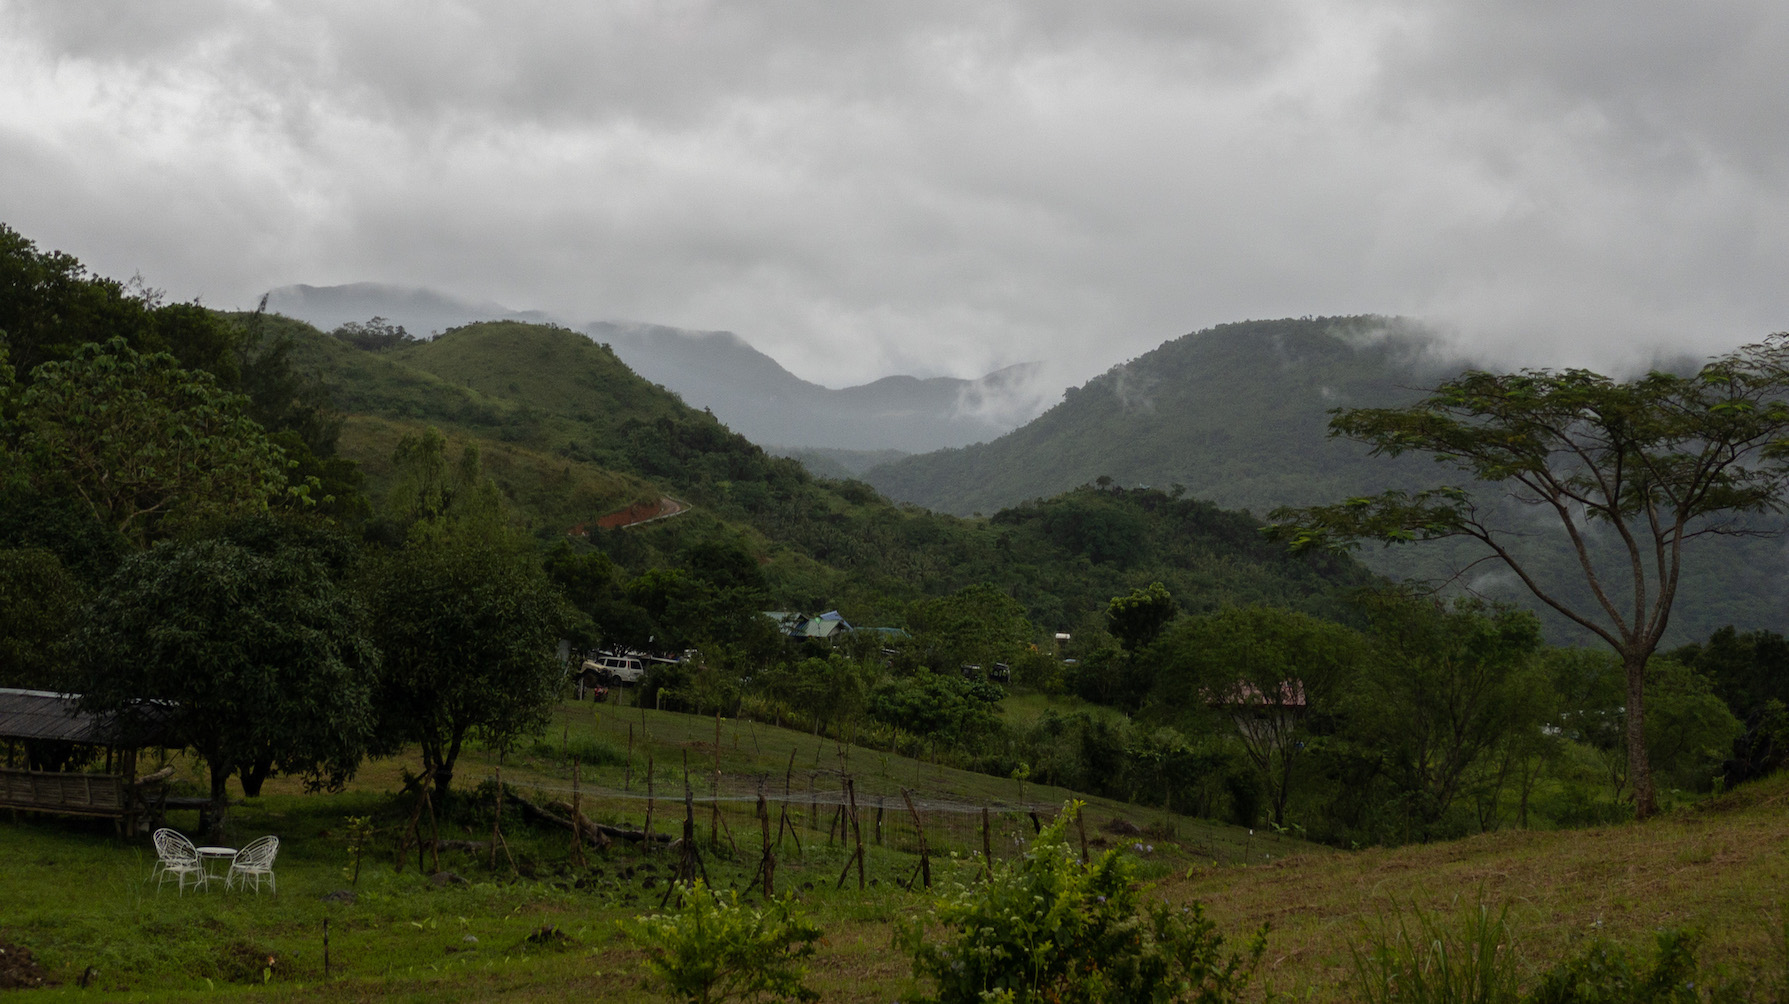 More Tanay mountains